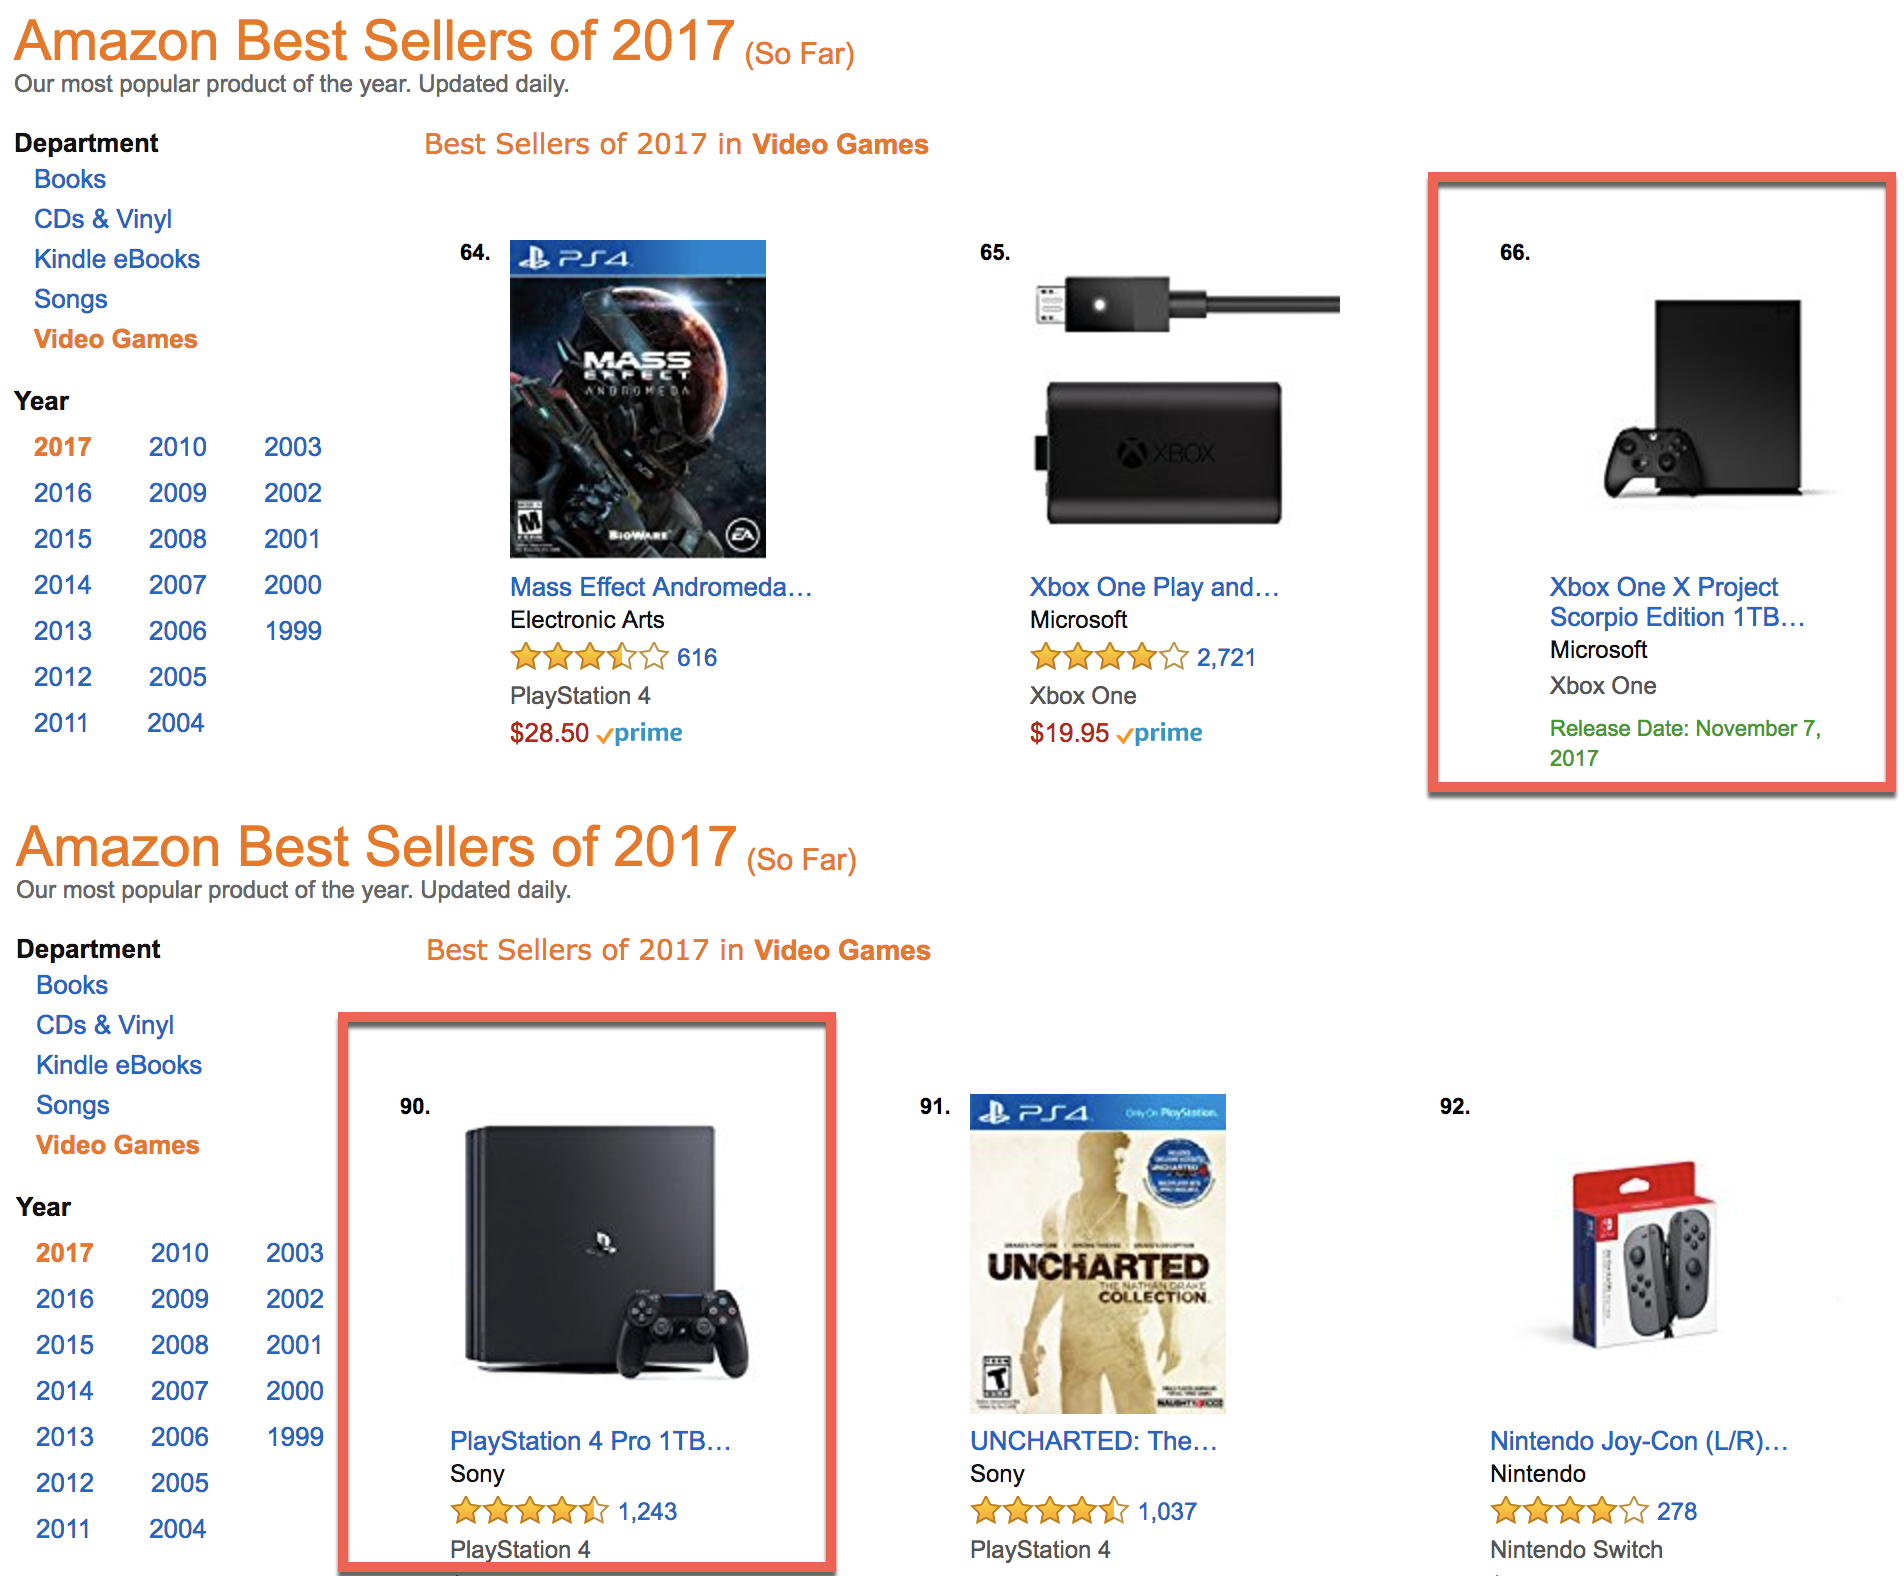 Amazon edition. Sony TB 2000. One s Project Scorpio. Amazon's choice vs best seller.